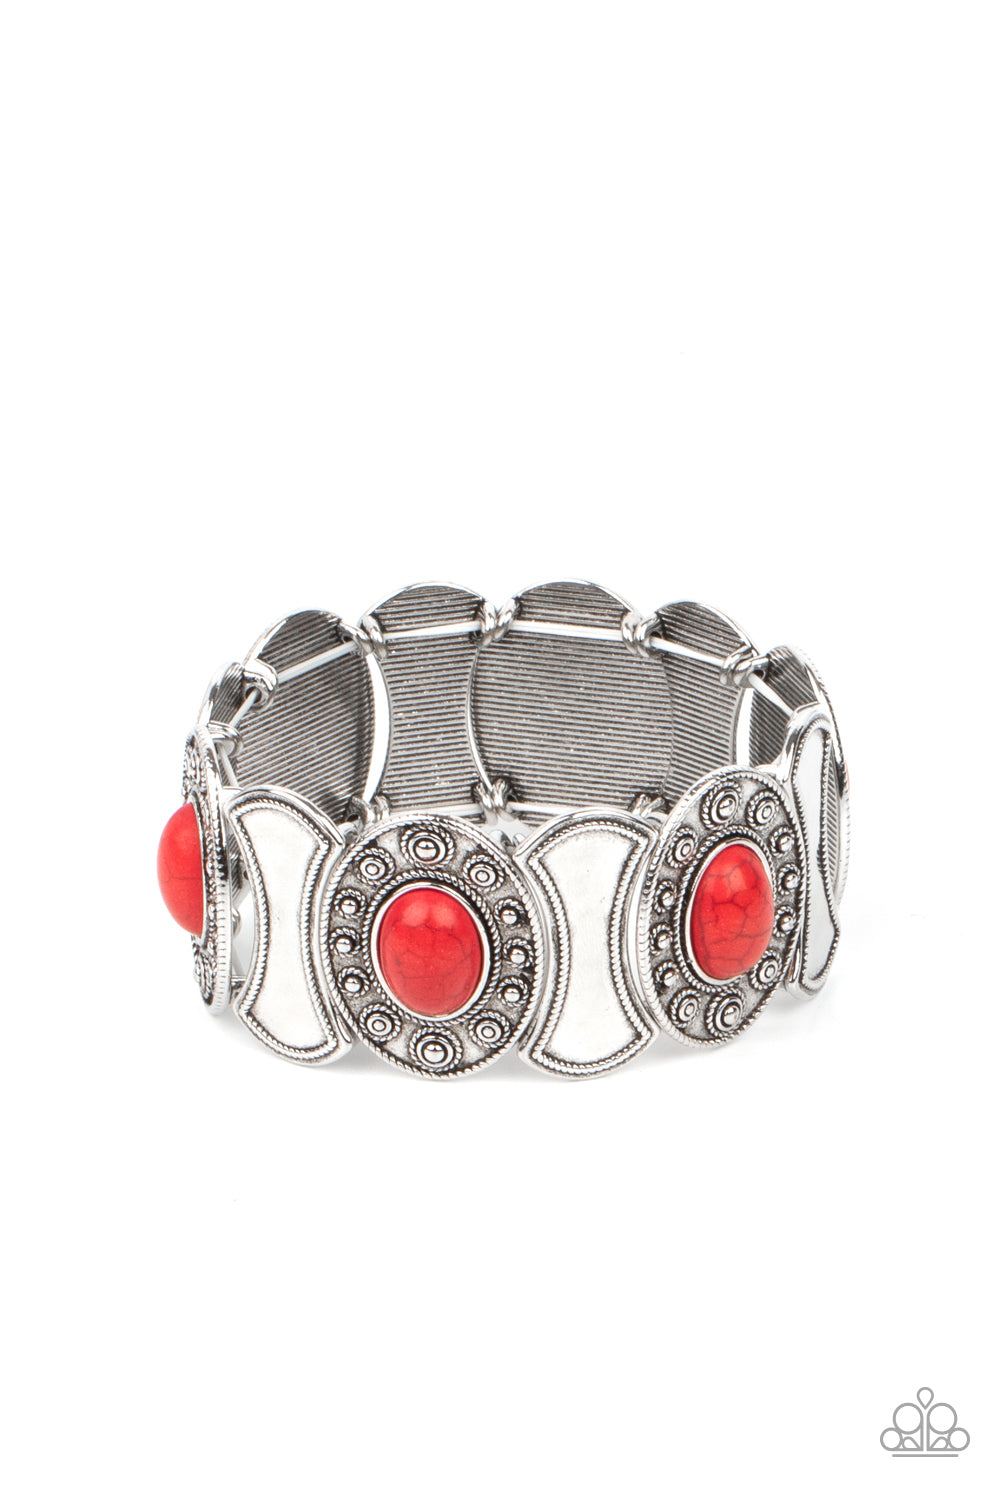 Desert Relic - Red Bracelet freeshipping - JewLz4u Gemstone Gallery